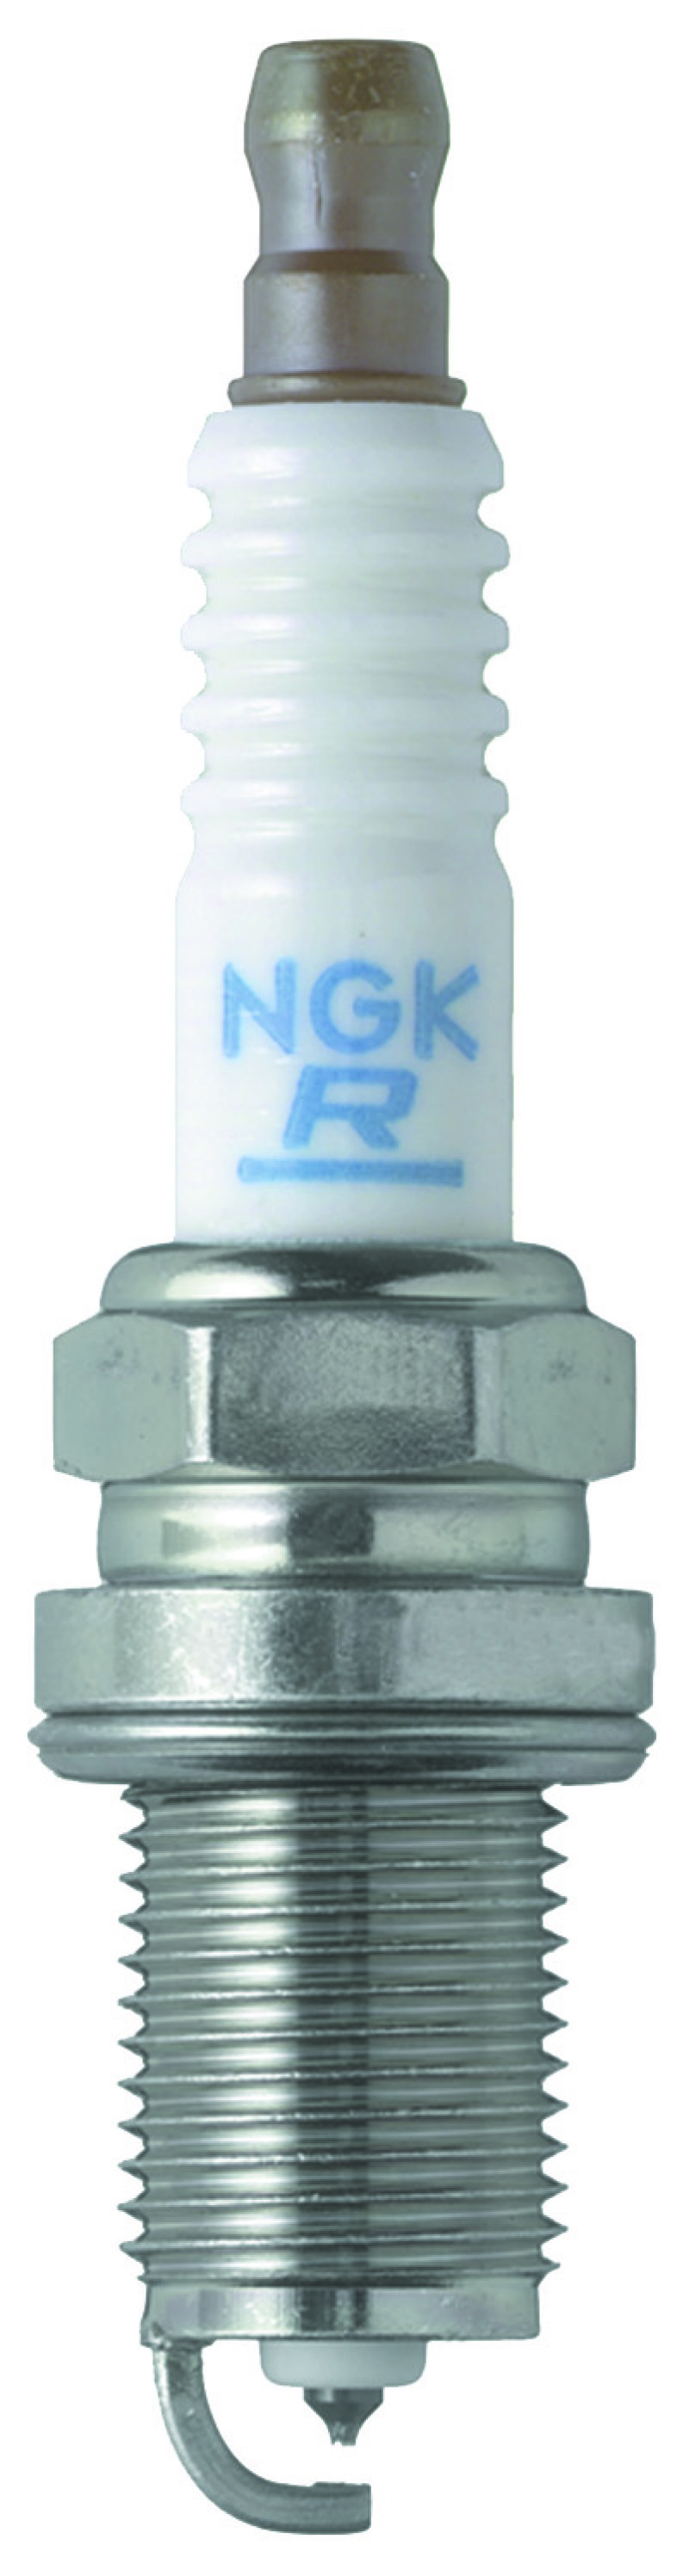 NGK Laser Platinum Spark Plug Box of 4 (PFR5G-13E) - 2761